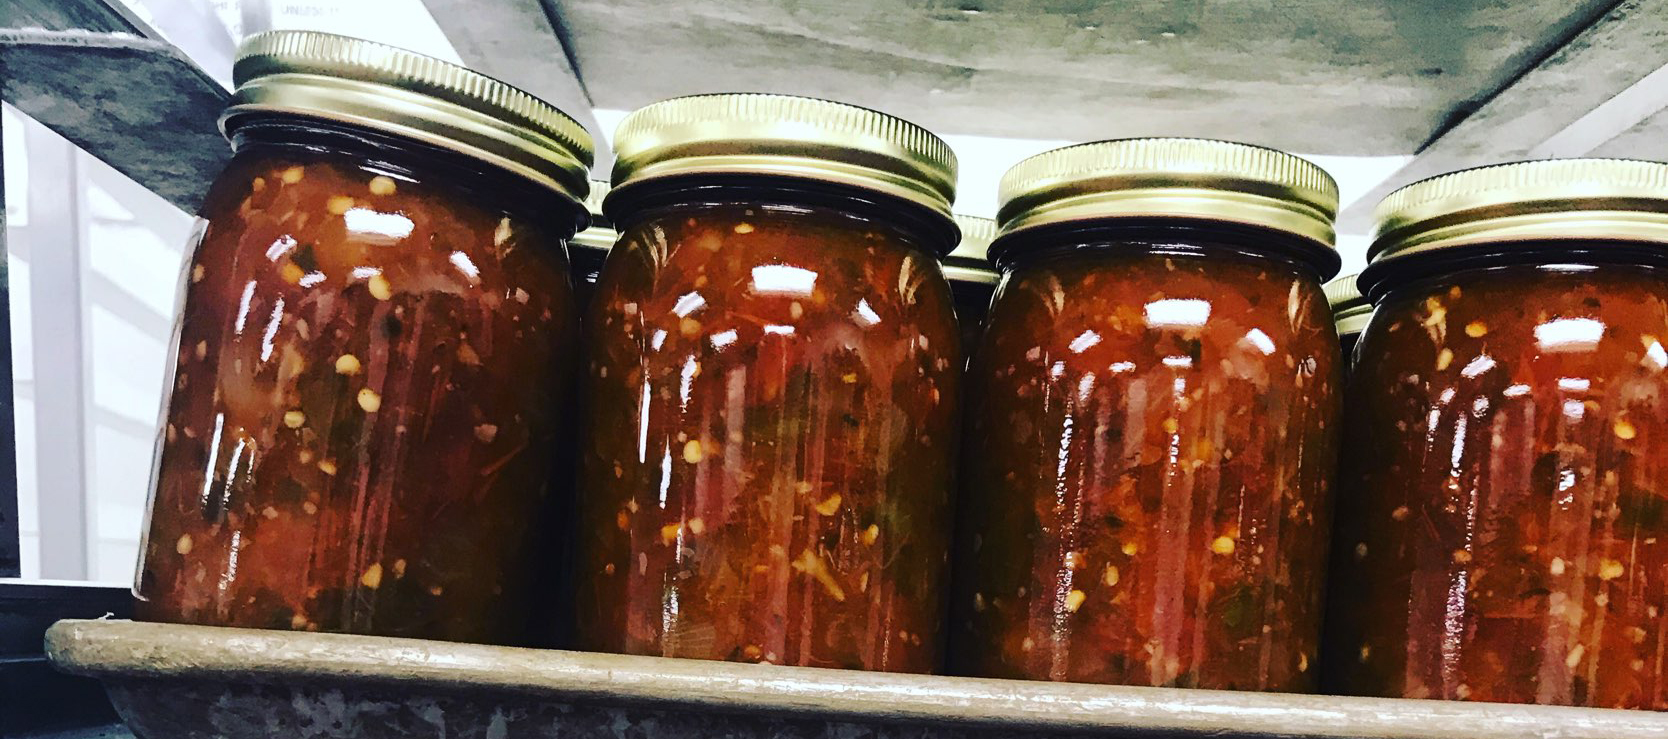 Tomato sauce in jars on a shelf